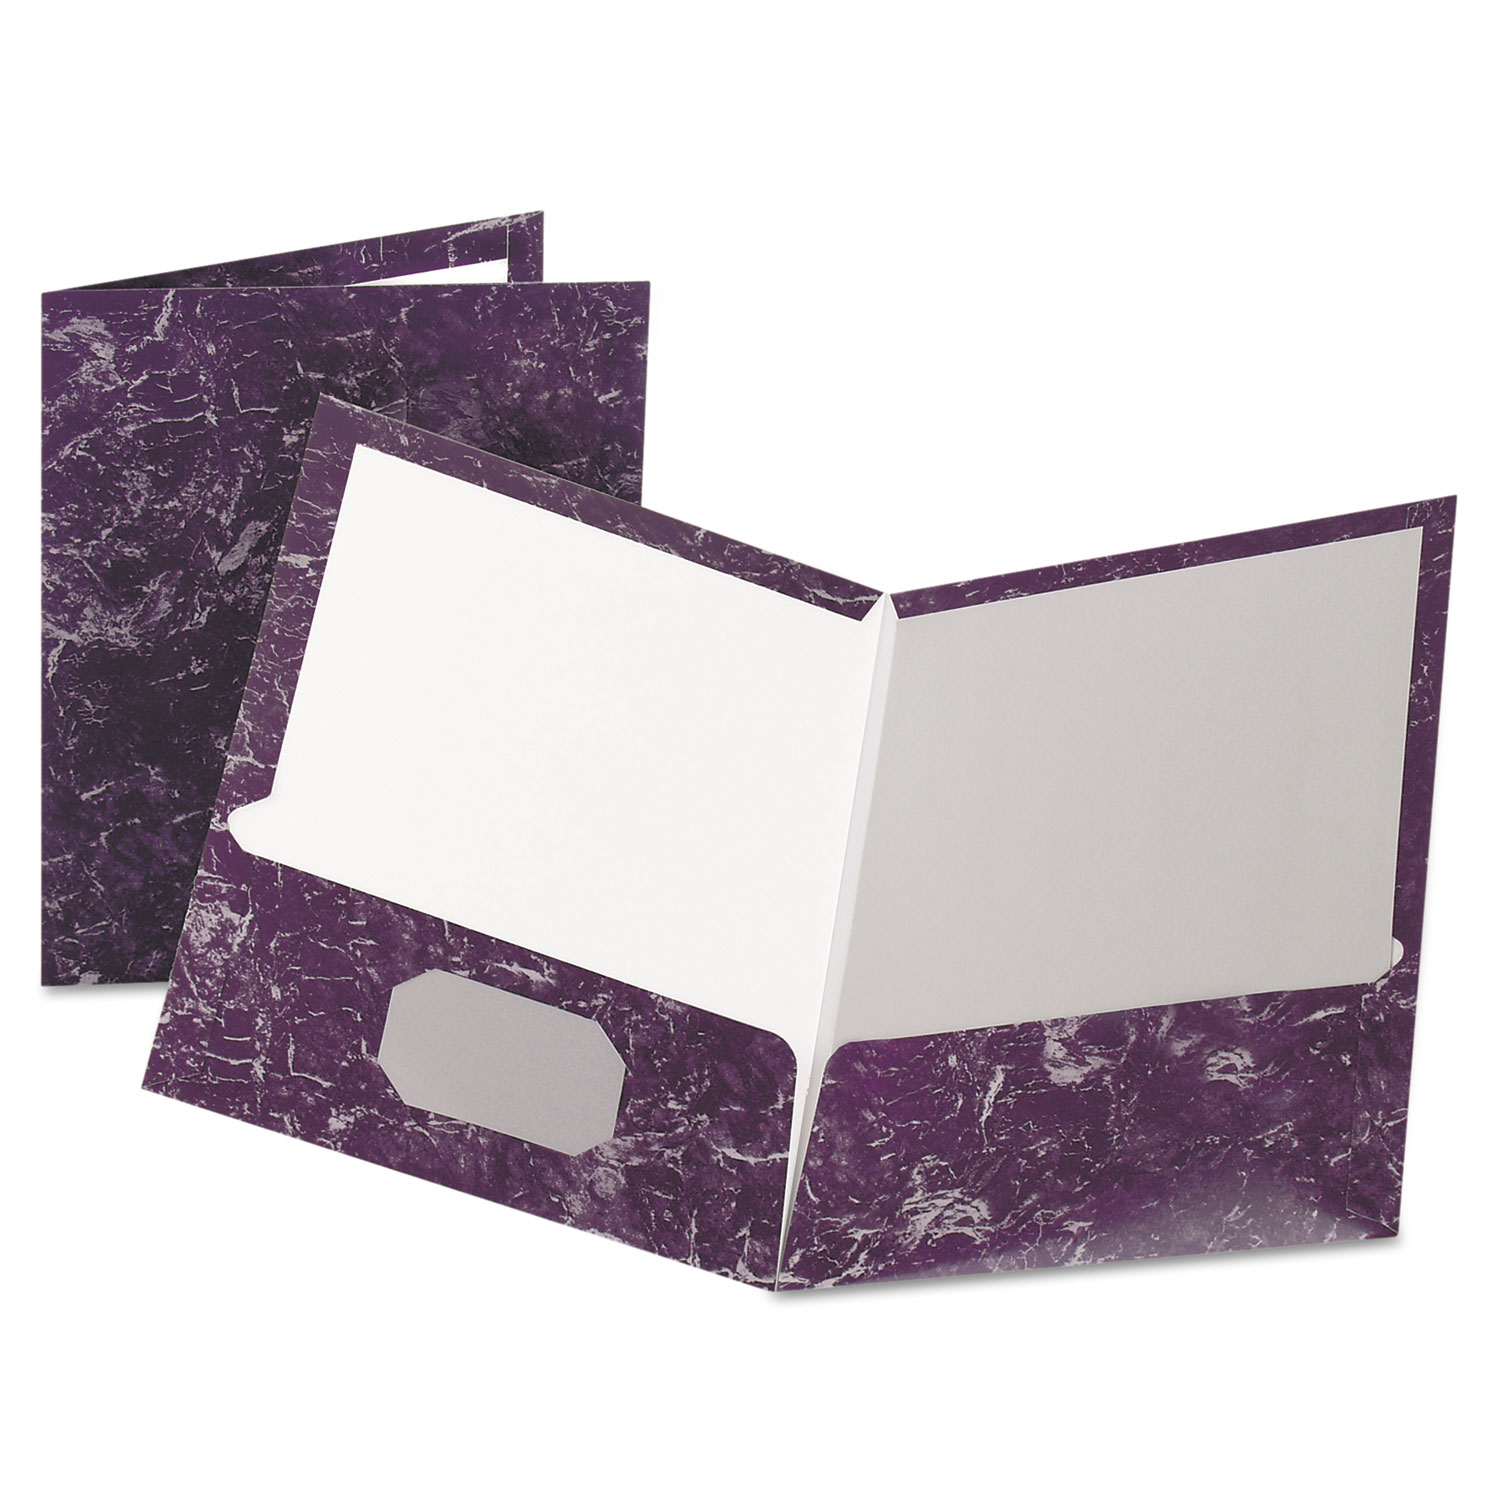  Oxford 51626 Marble Design Laminated High-Gloss Twin Pocket Folder, Purple, 25/box (OXF51626) 